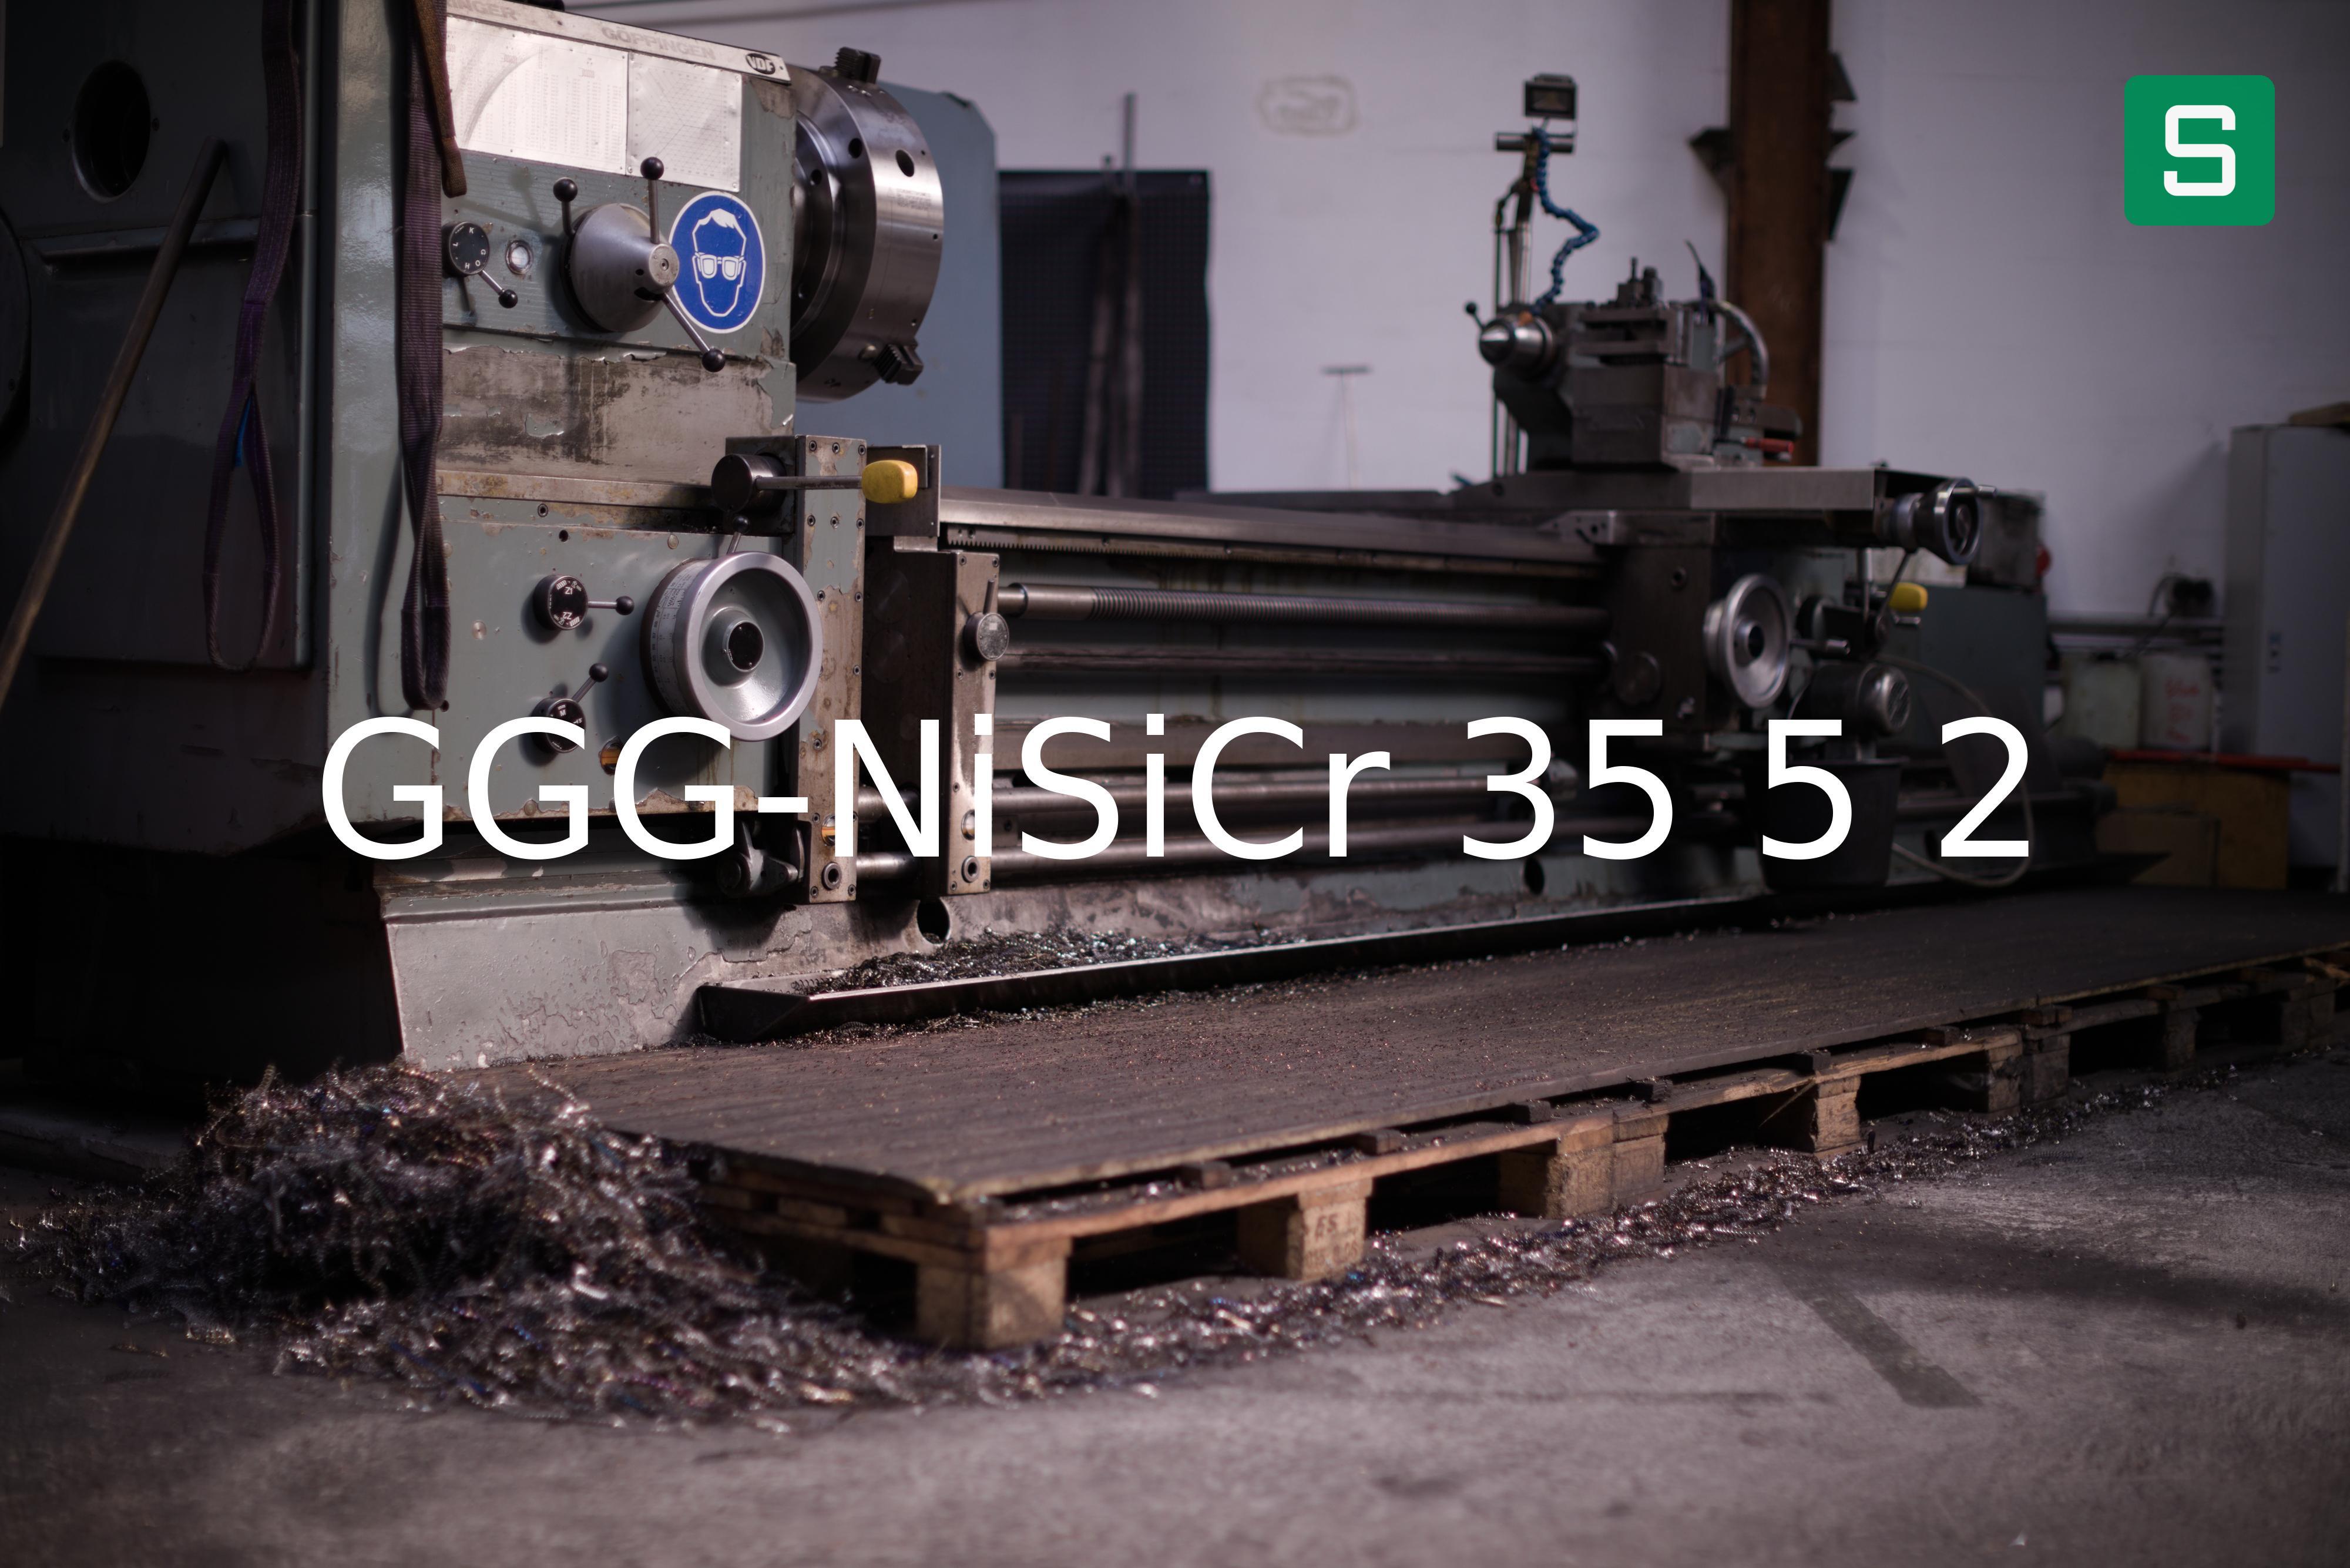 Steel Material: GGG-NiSiCr 35 5 2